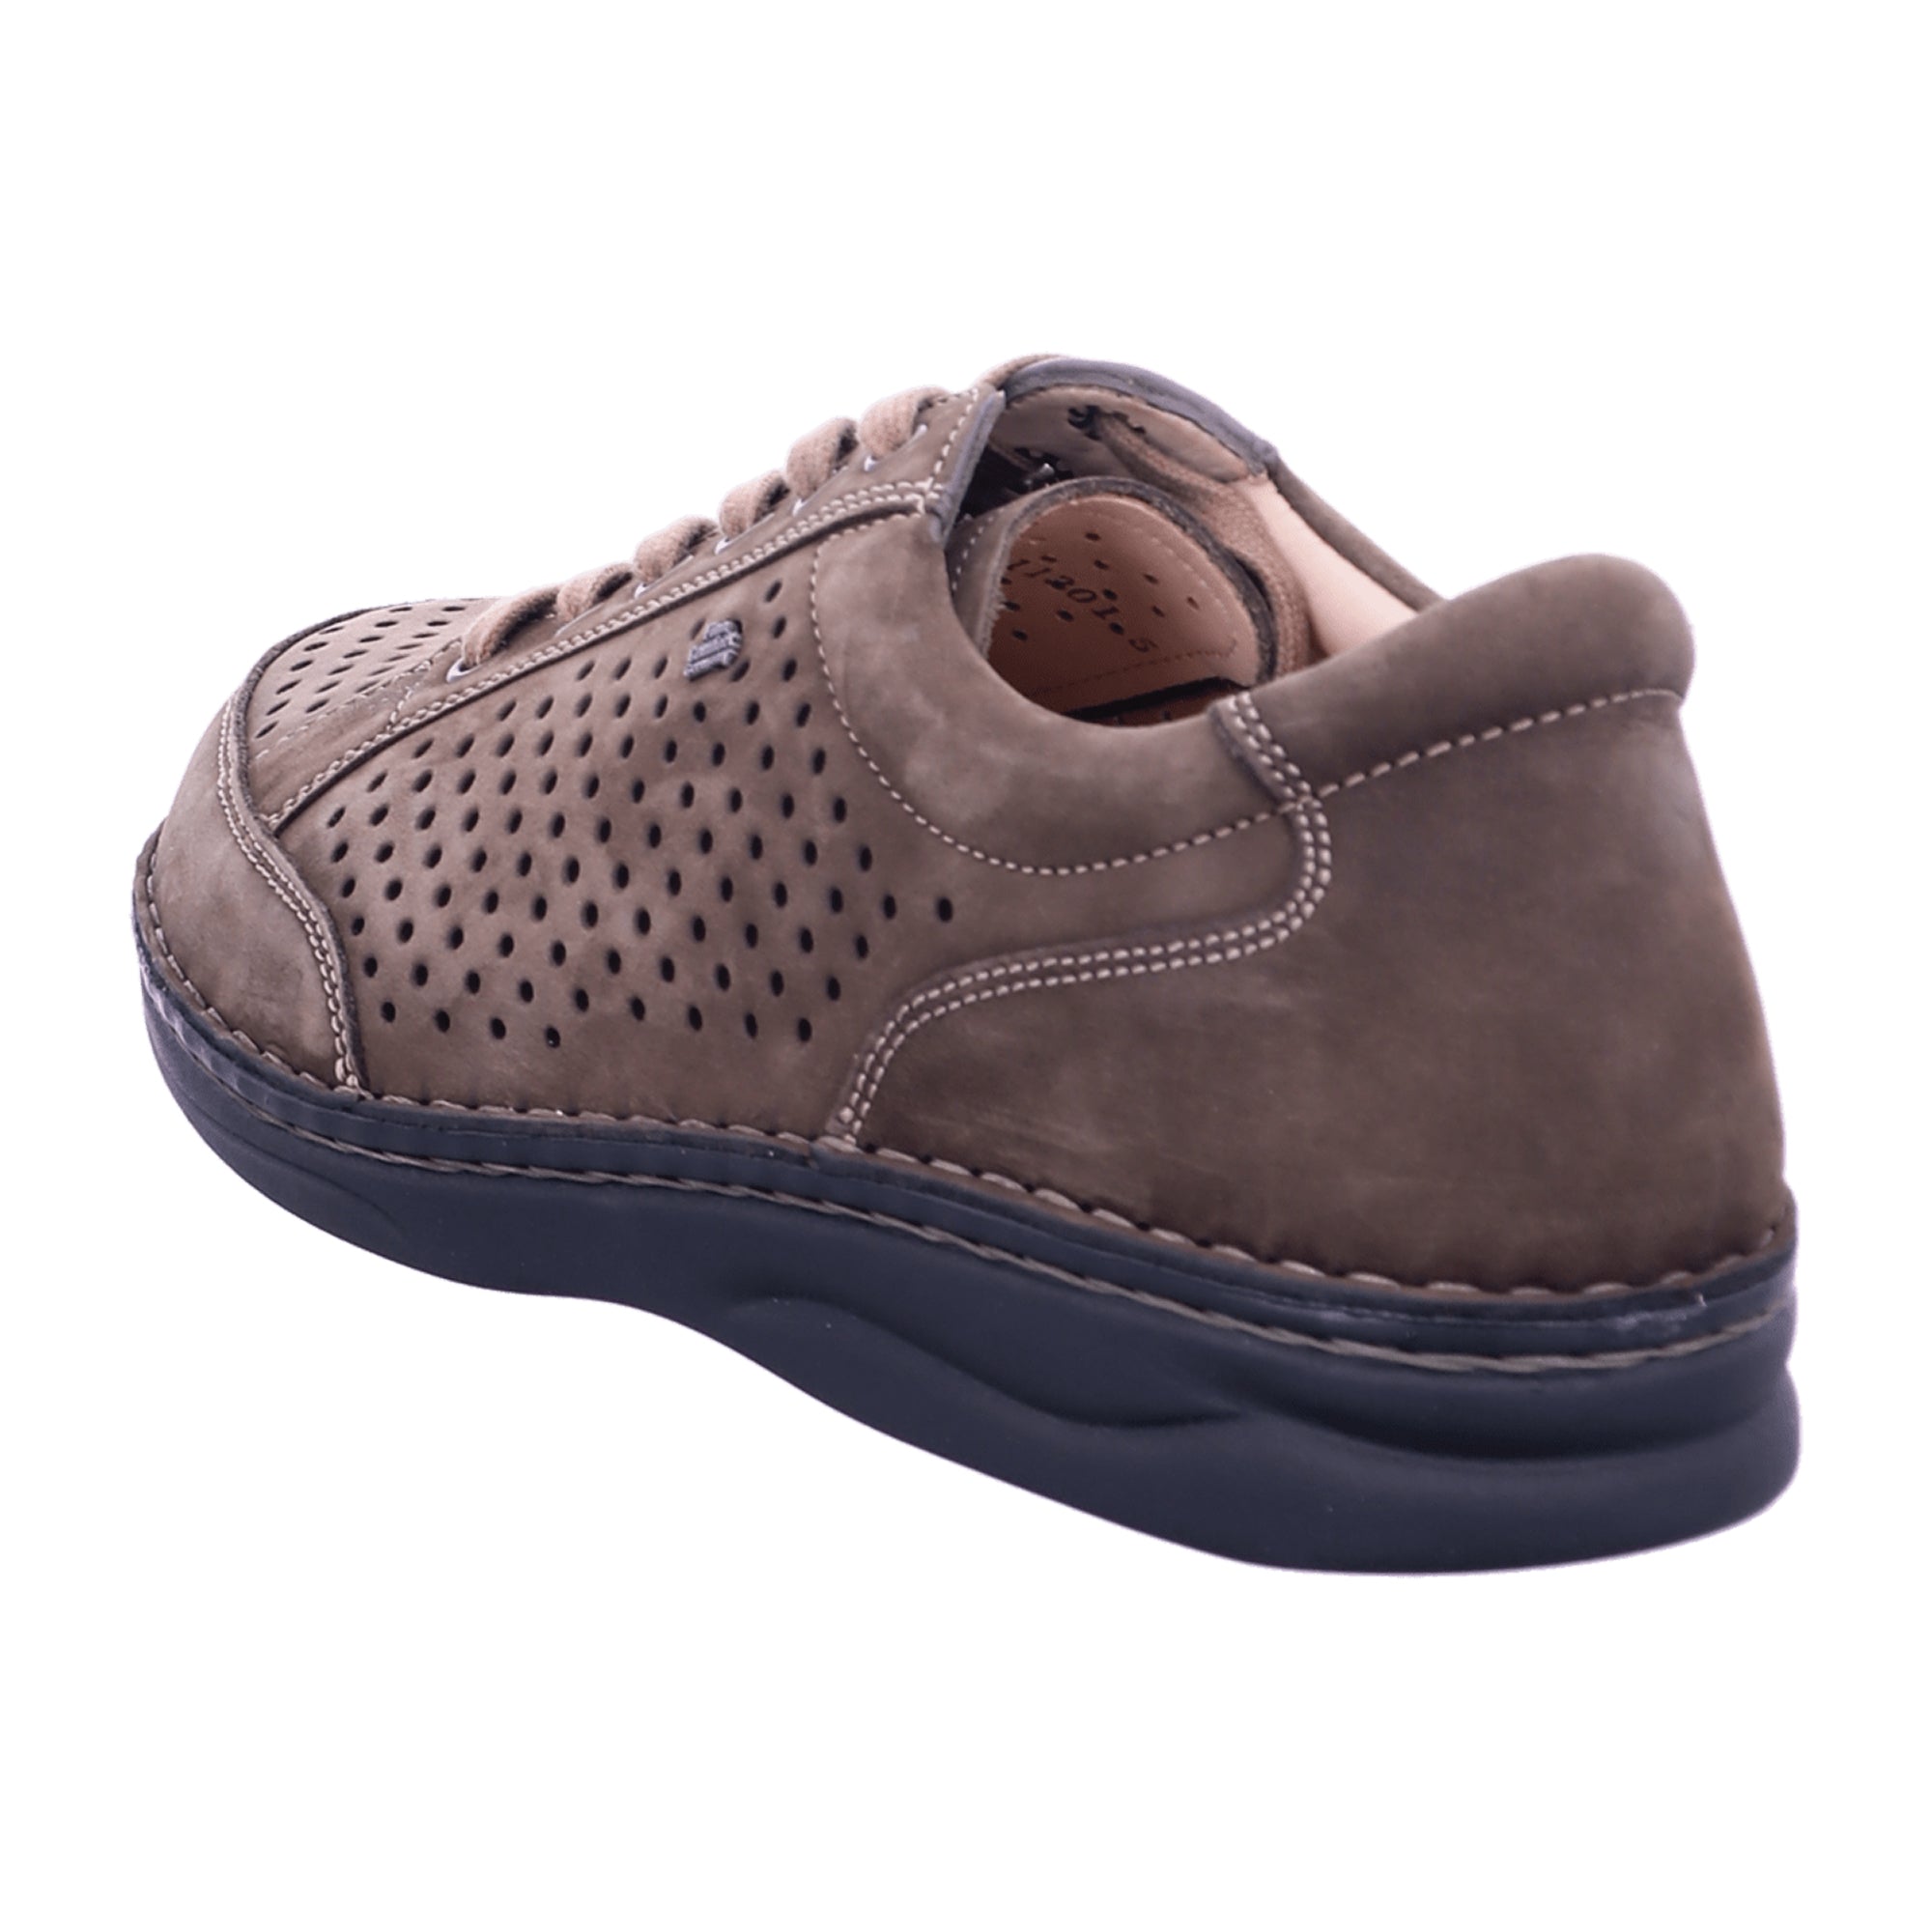 Finn Comfort Bardolino Men's Comfort Shoes, Stylish Brown Leather